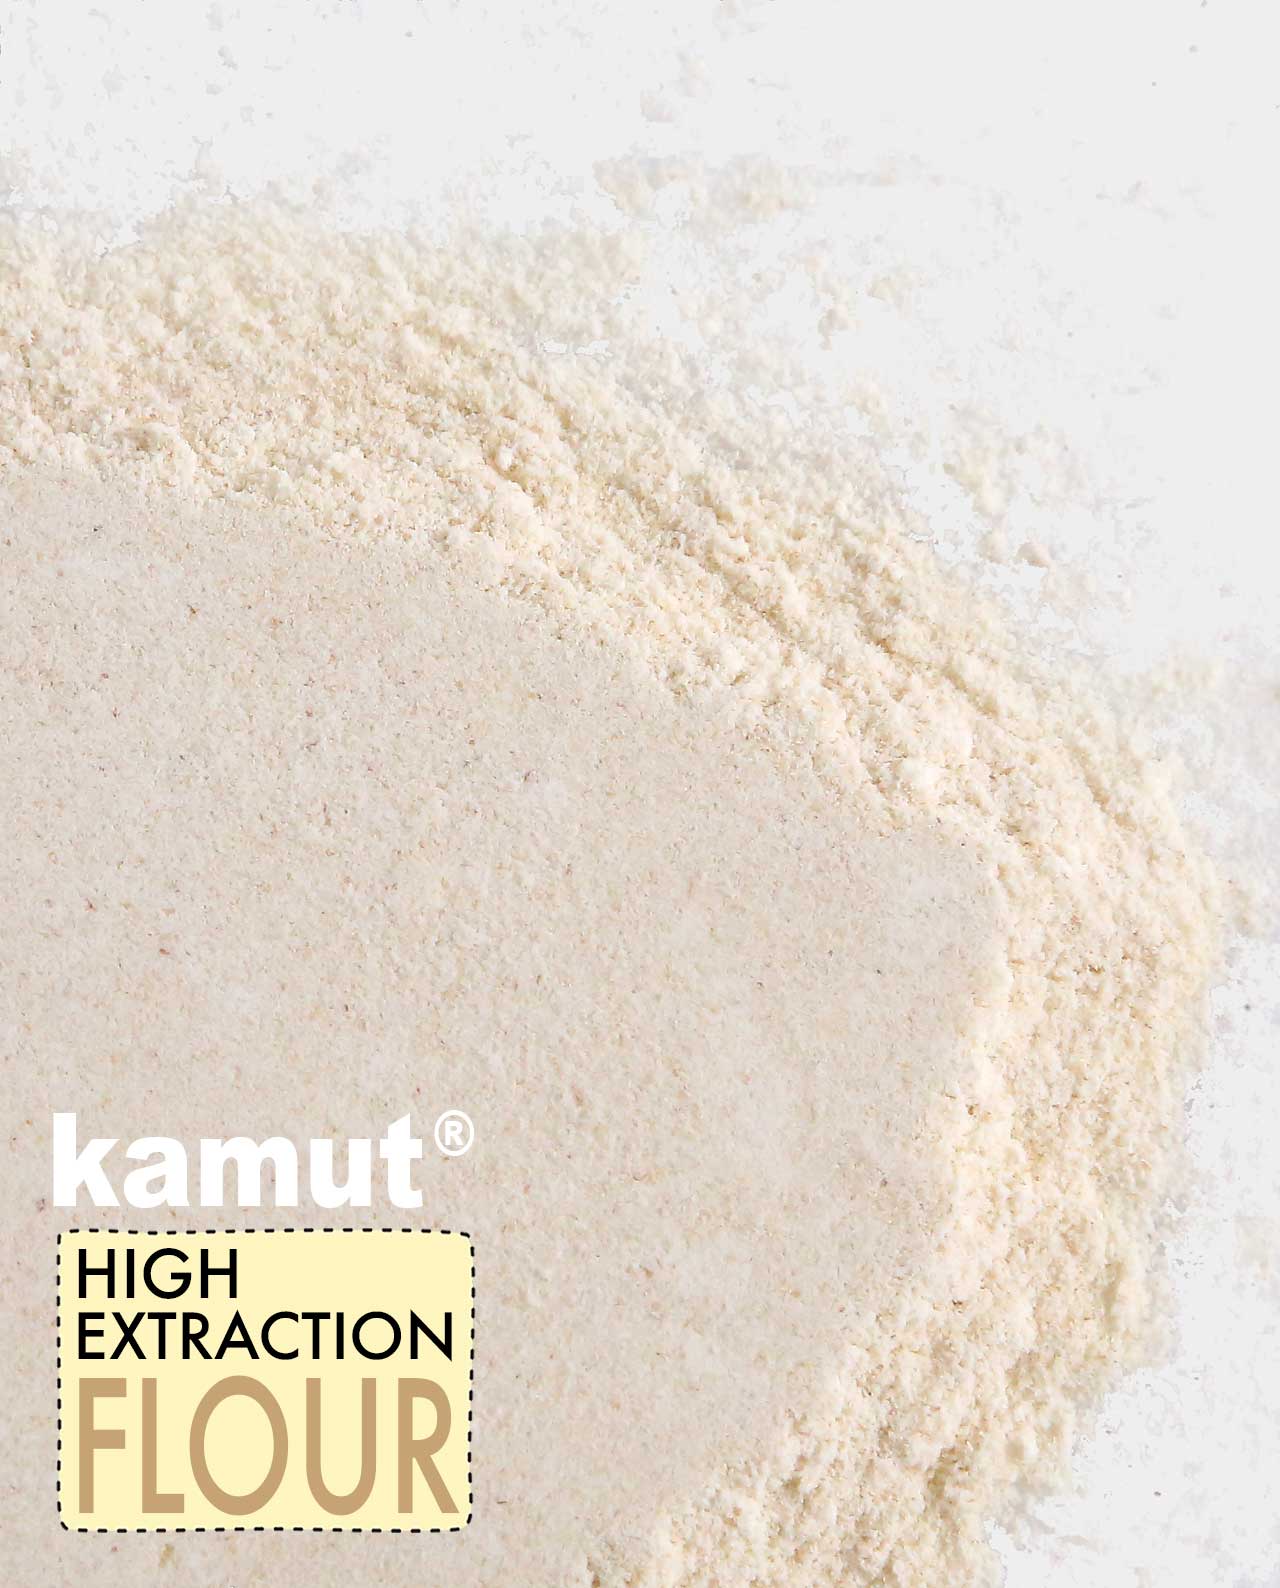 Kamut® High Extraction Flour